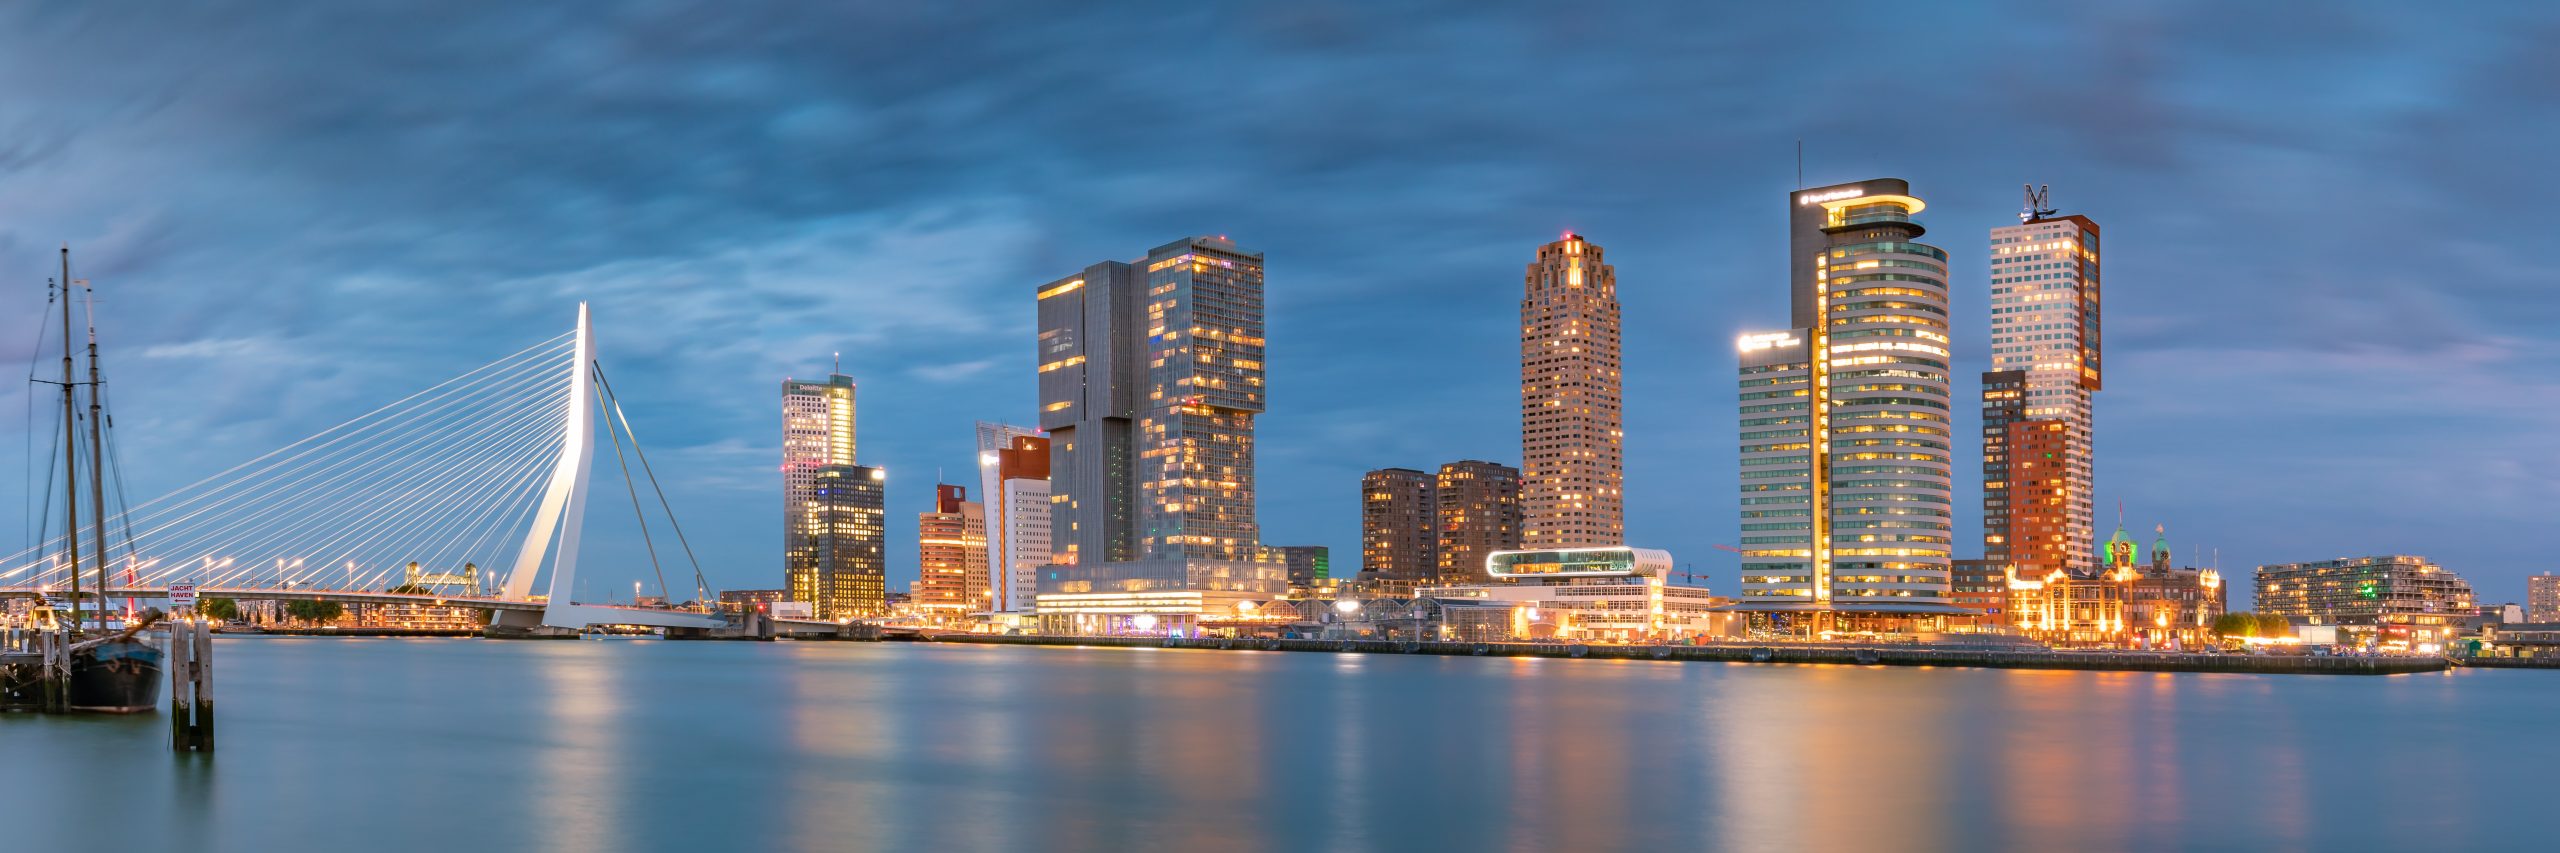 Skyline van Rotterdam tijdens blue hour